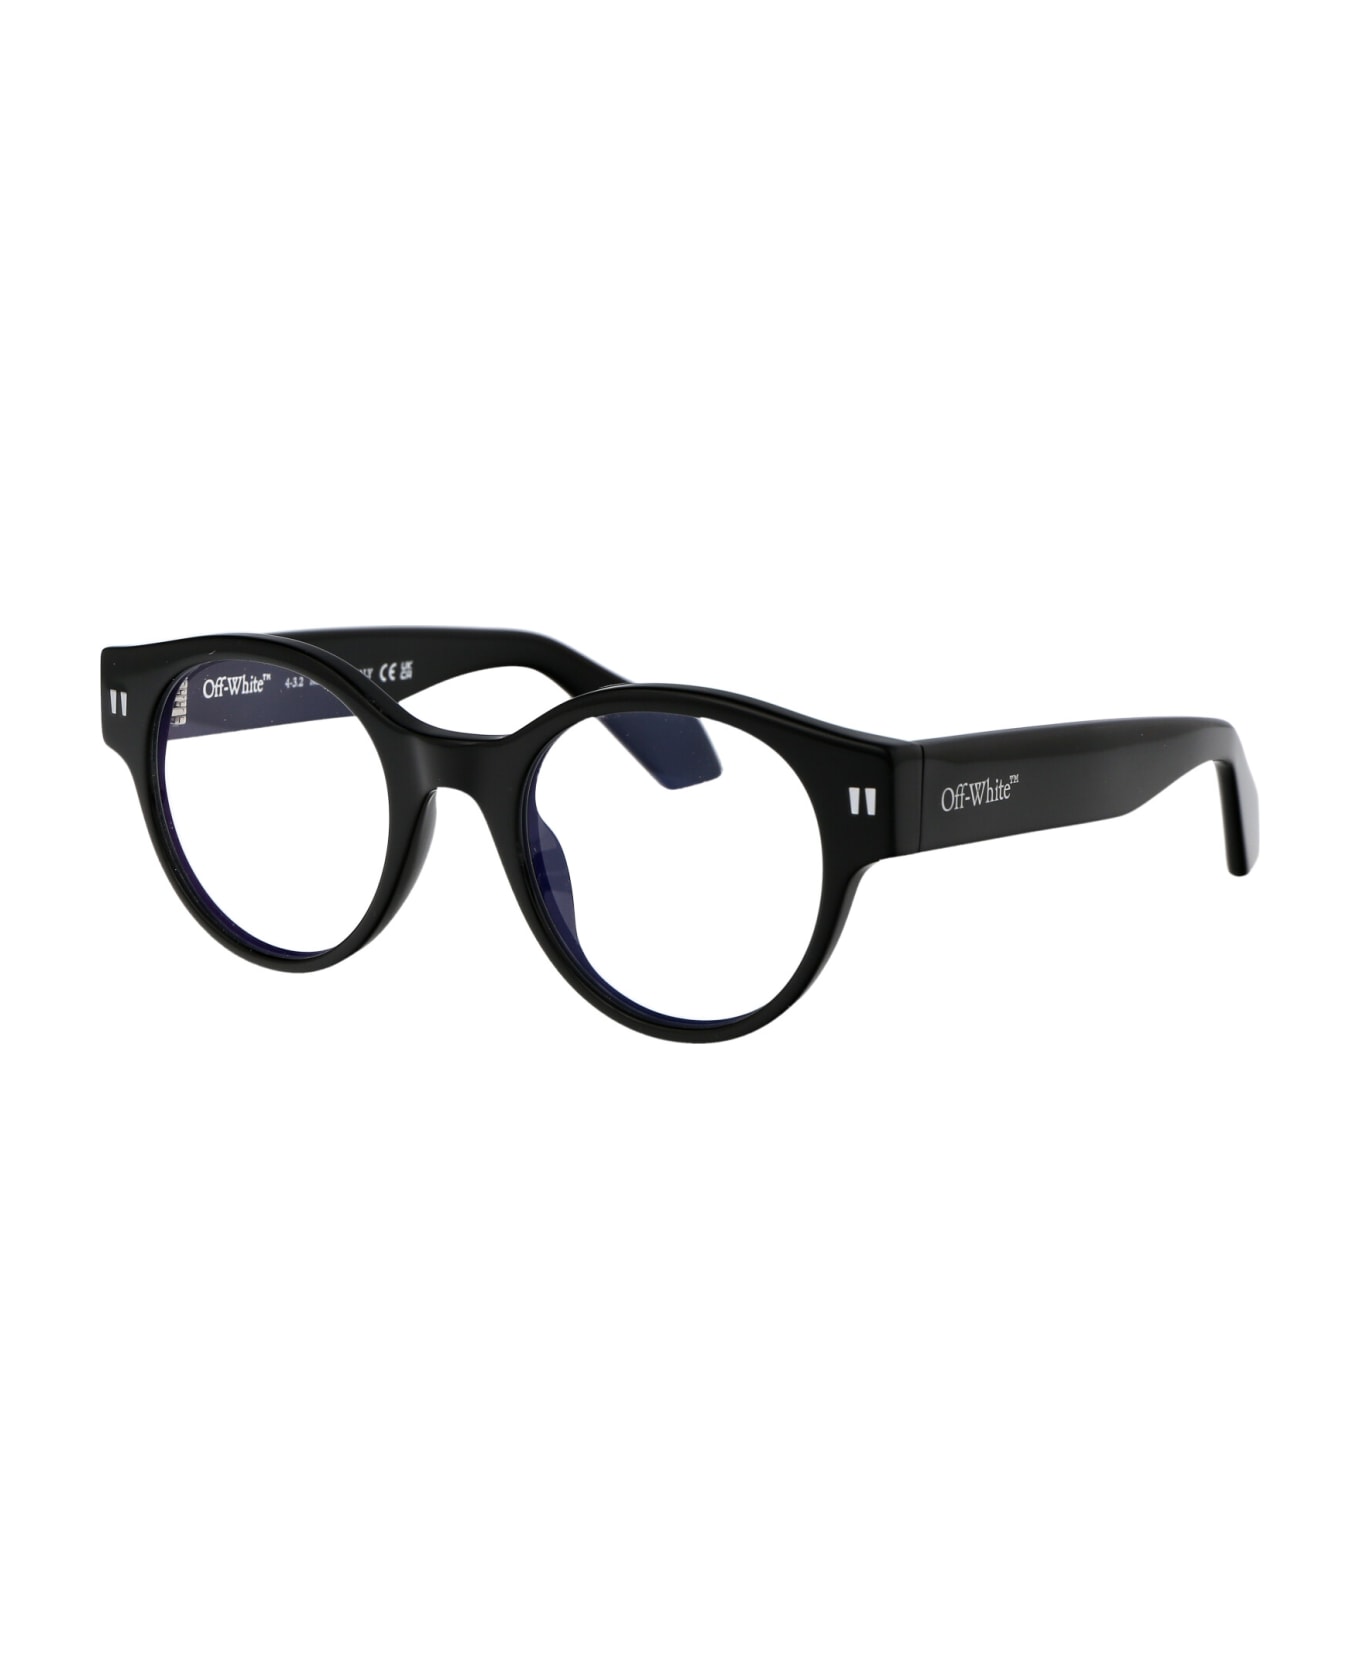 Off-White Optical Style 55 Glasses - 1000 BLACK